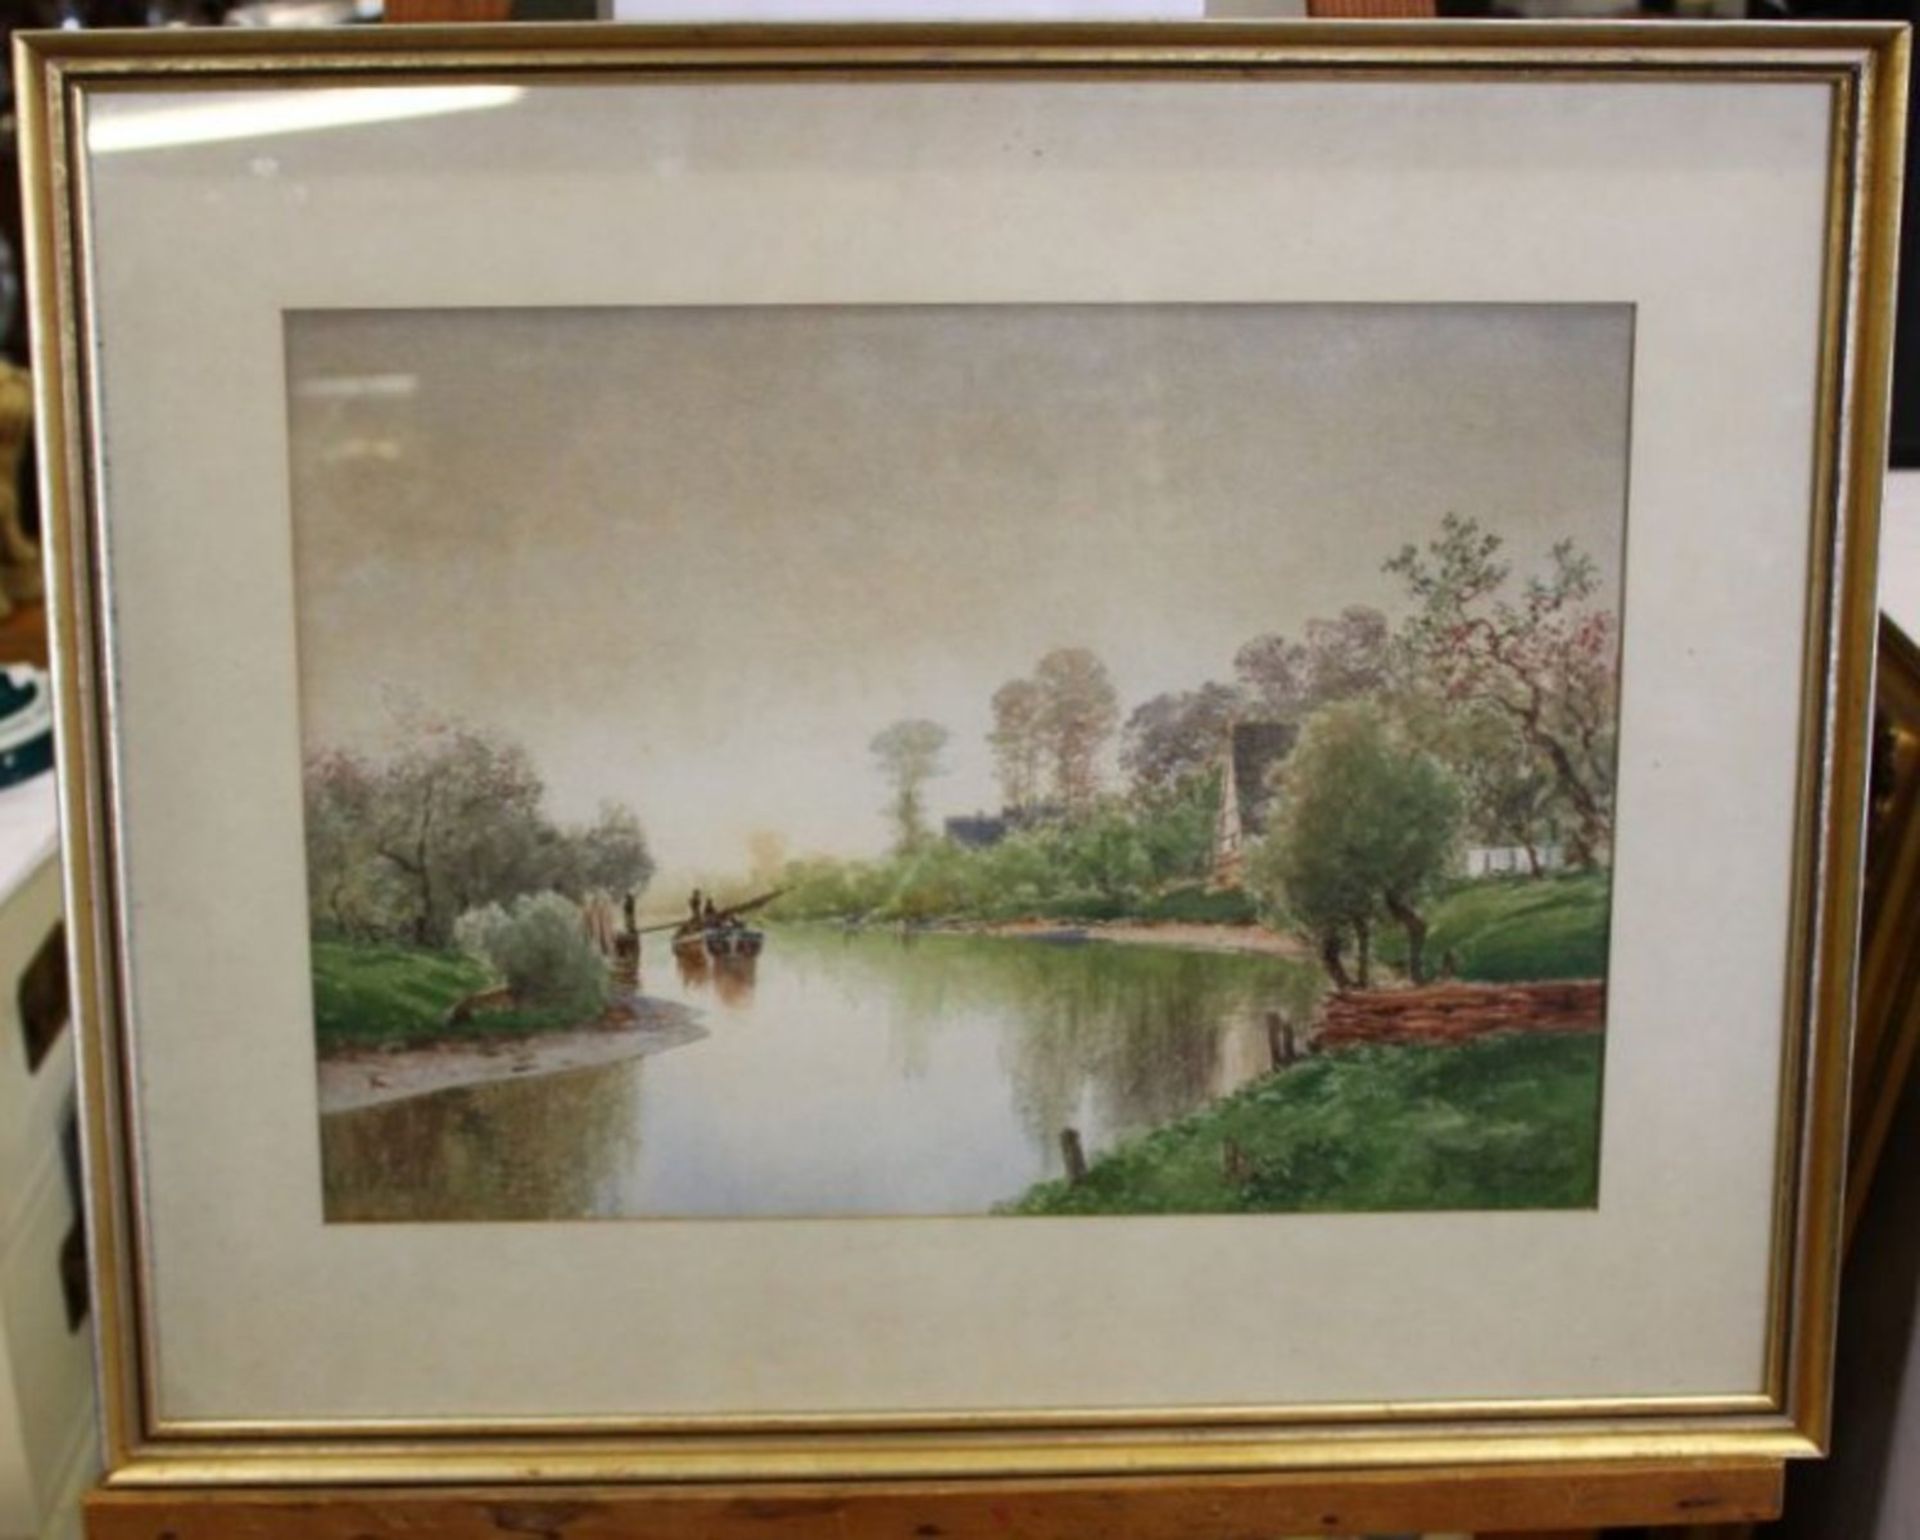 wohl Ascan LUTTEROTH (1842-1923) "Flusslandschaft mit Boot und Haus", datiert (18)93, Aquarell, - Bild 3 aus 3